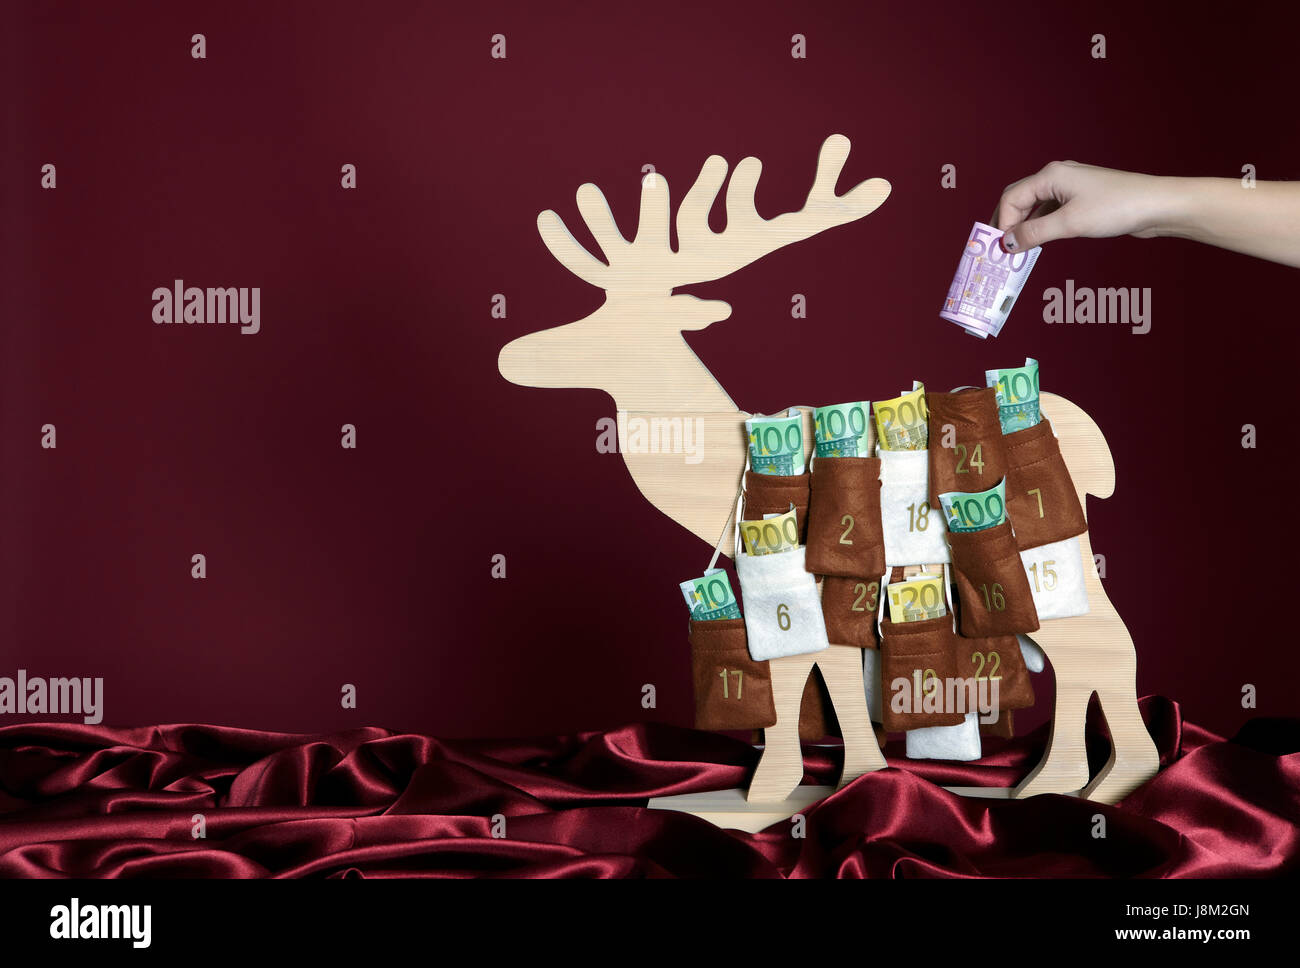 wood, euro, bank notes, elk, reindeer, advent calendar, money, calender, Stock Photo